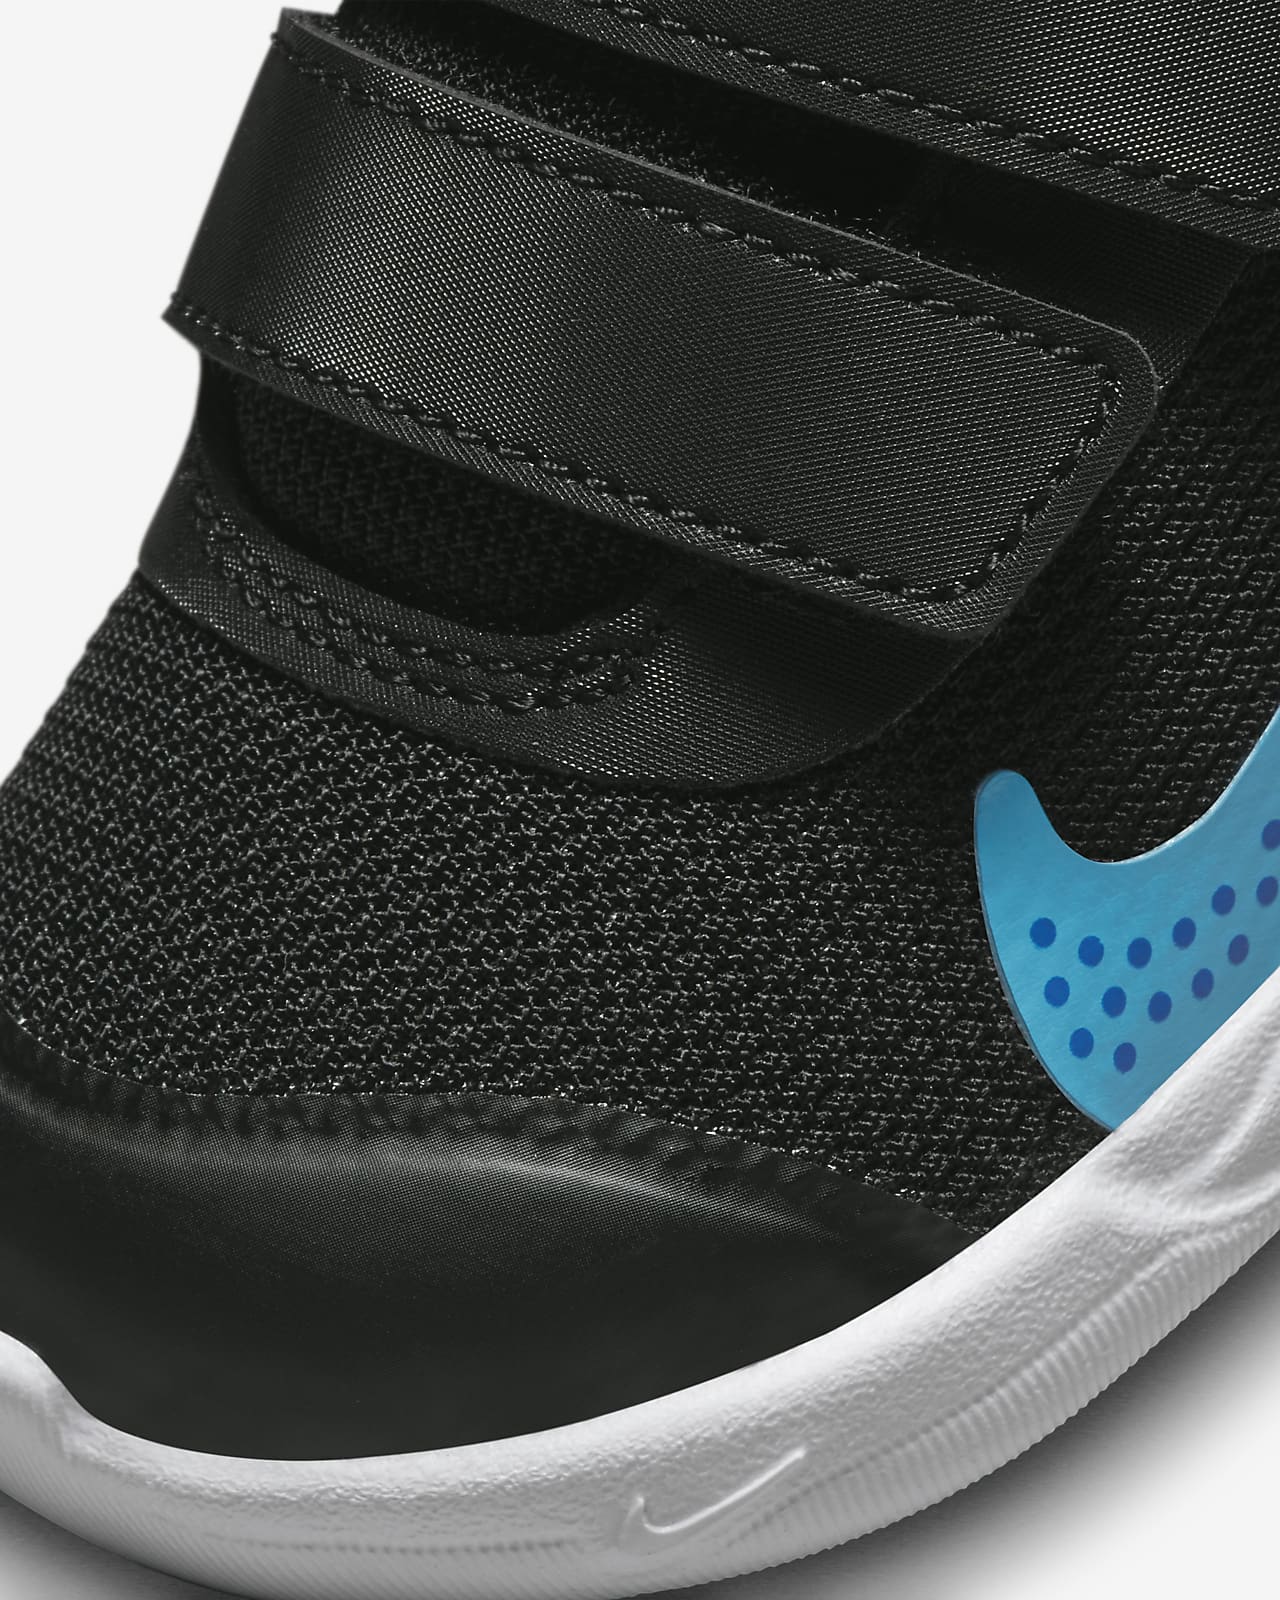 Nike Omni Shoes. Multi-Court ID Nike Baby/Toddler